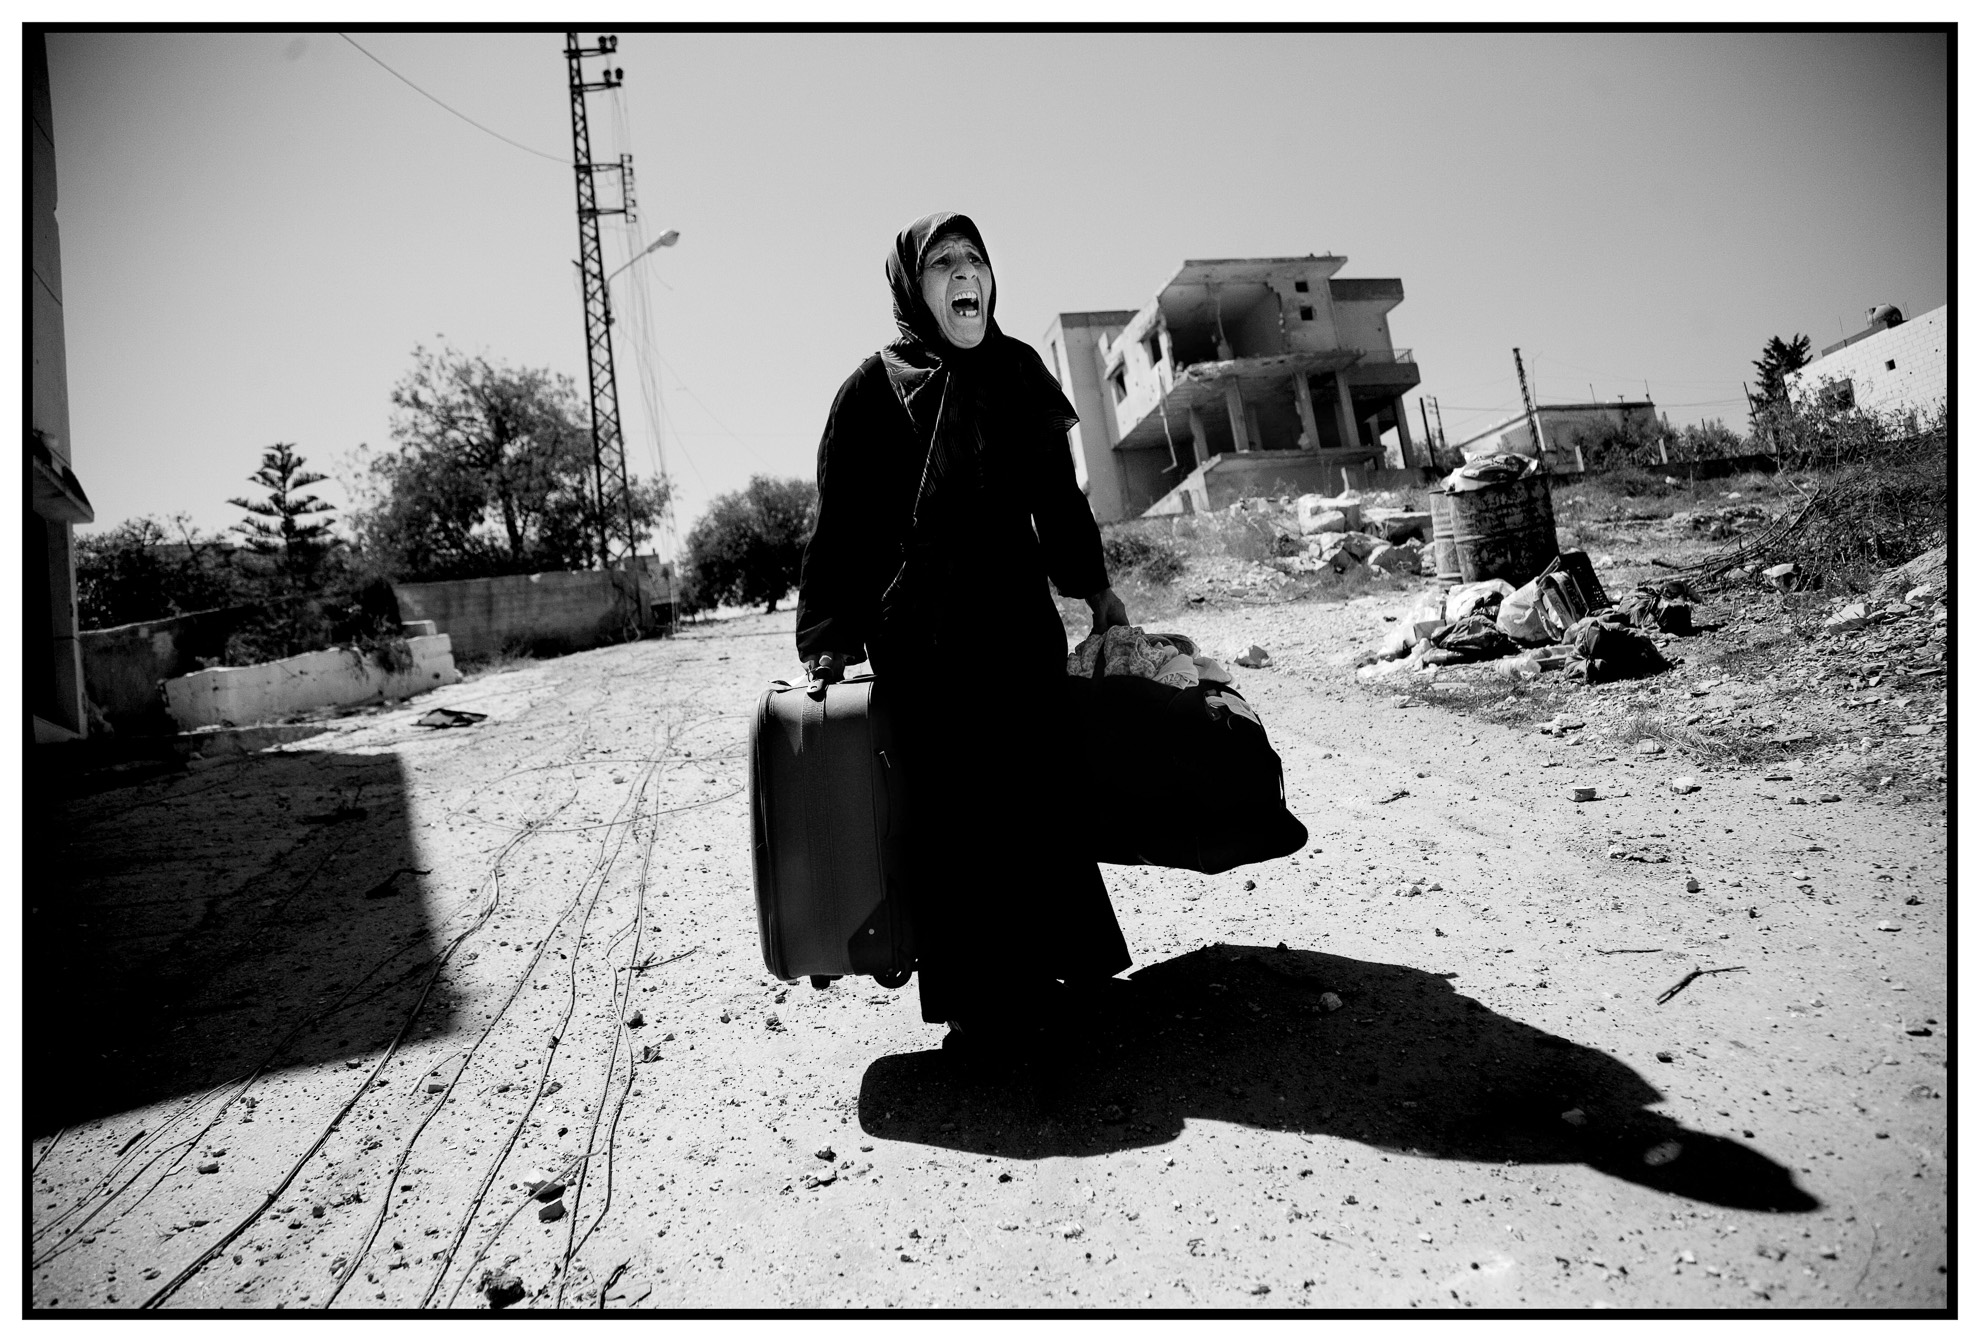 Bint Jabail, July 2006. Lebanon's crisis. The war between Israel and Hezbollah. A woman refugee.